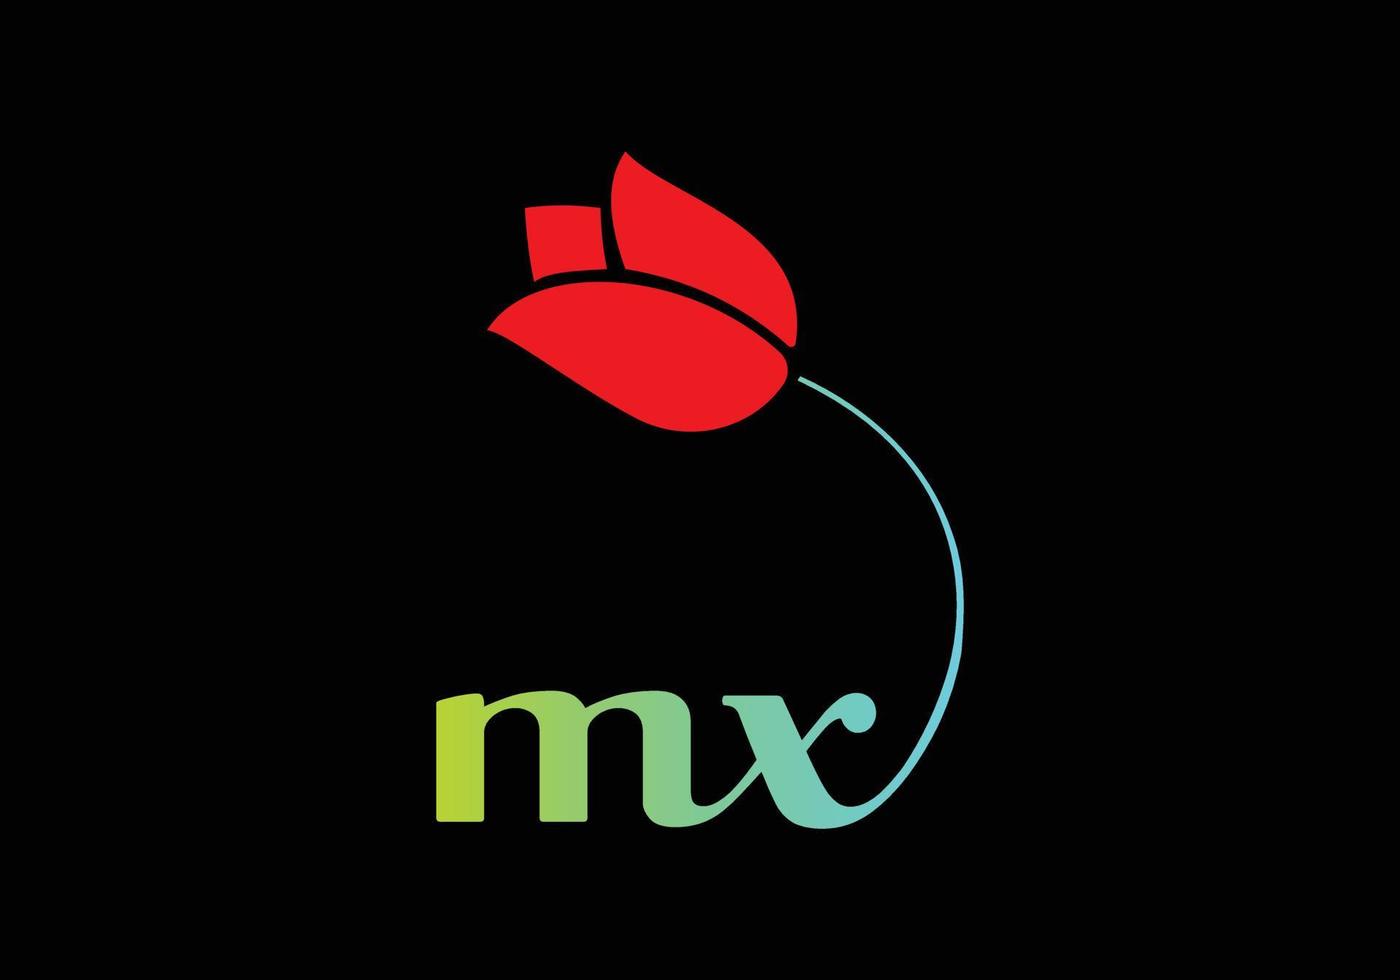 MX Monograms Rose logo, Luxury Cosmetics Spa Beauty vector template